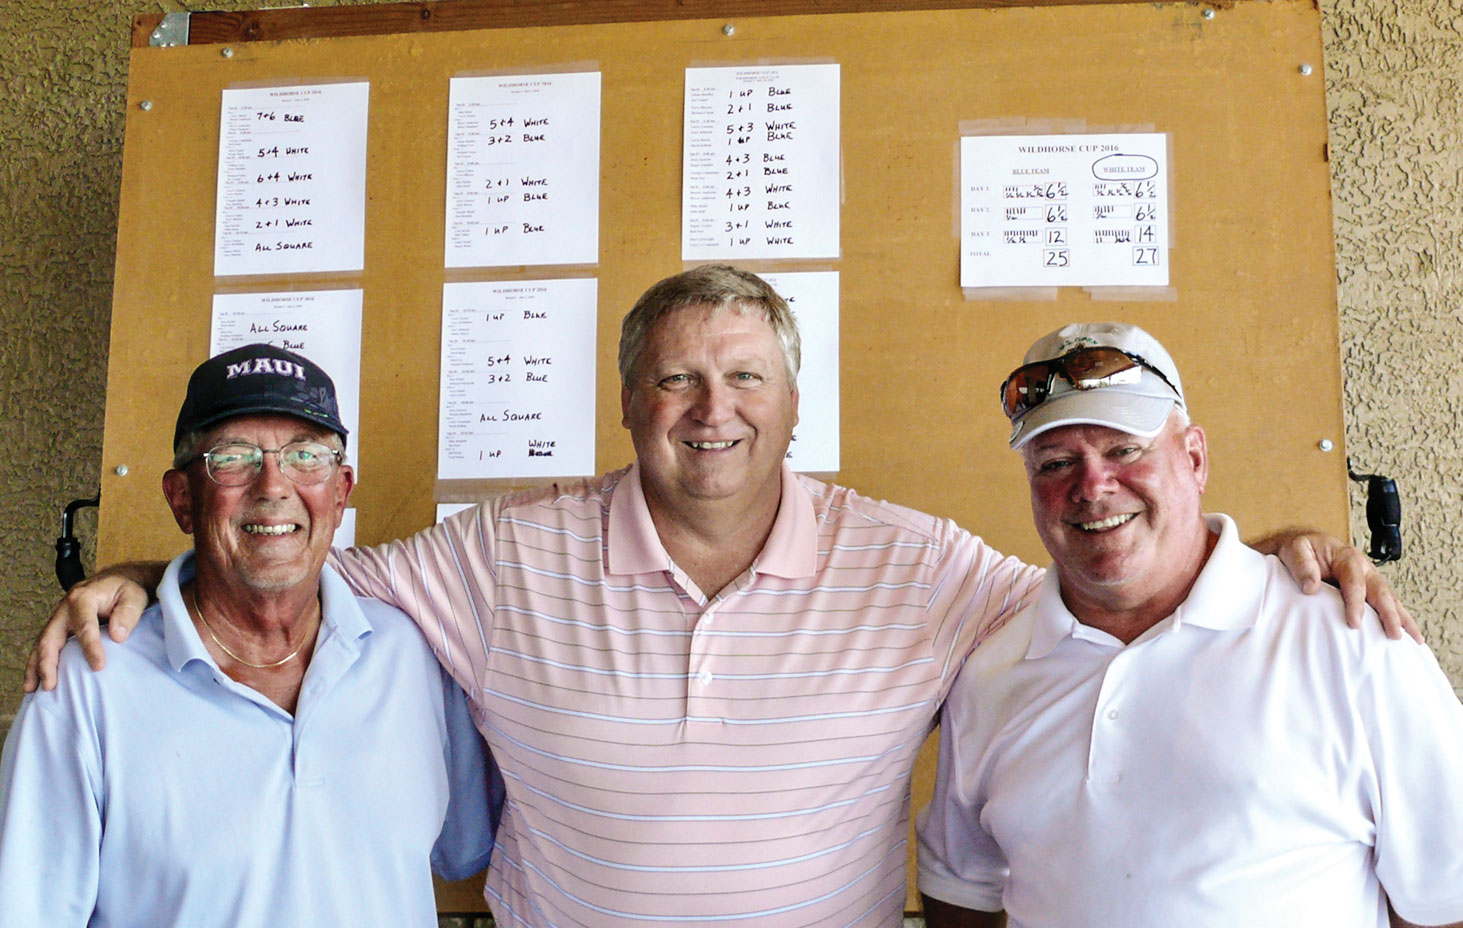 Left to right: Glenn Headley, MGA Vice President and Captain of the Blue Team; David Thatcher, Wildhorse Golf Club Head Golf Professional; and Joe Cooper, MGA President and Captain of the White Team.